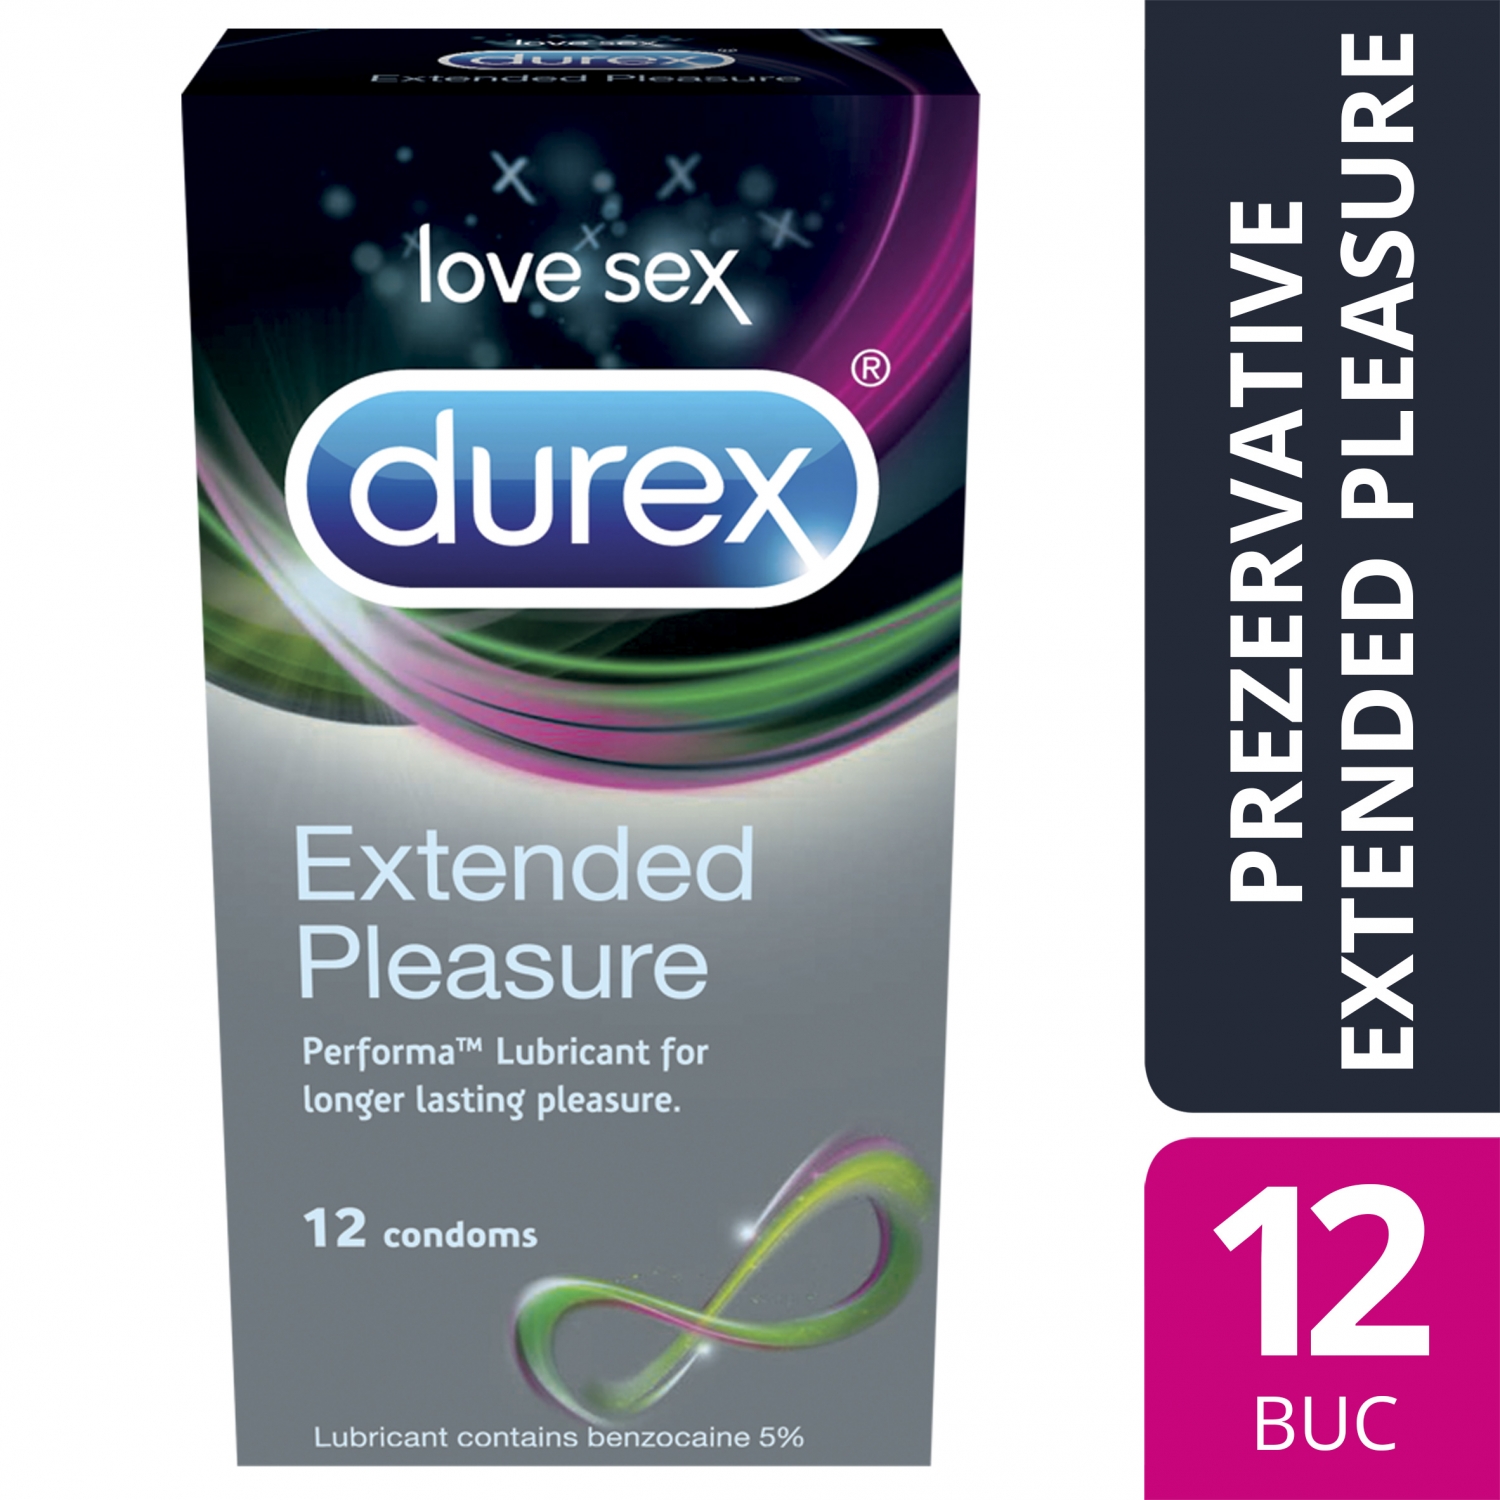 Protecție și lubrefiere - Durex Extended Pleasure x 12buc, epastila.ro